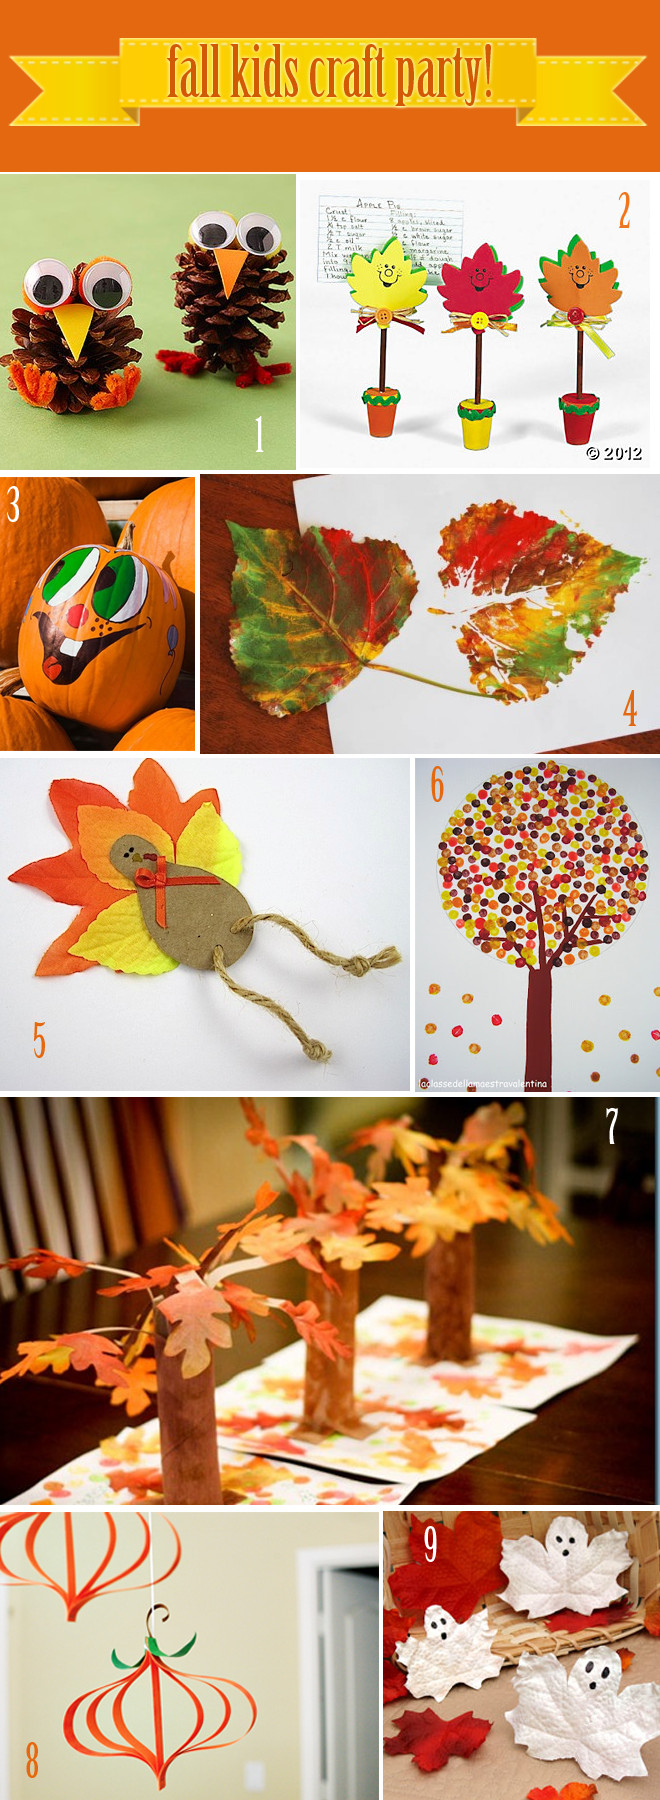 Fall Toddler Craft Ideas
 9 Fall Craft Ideas For Kids